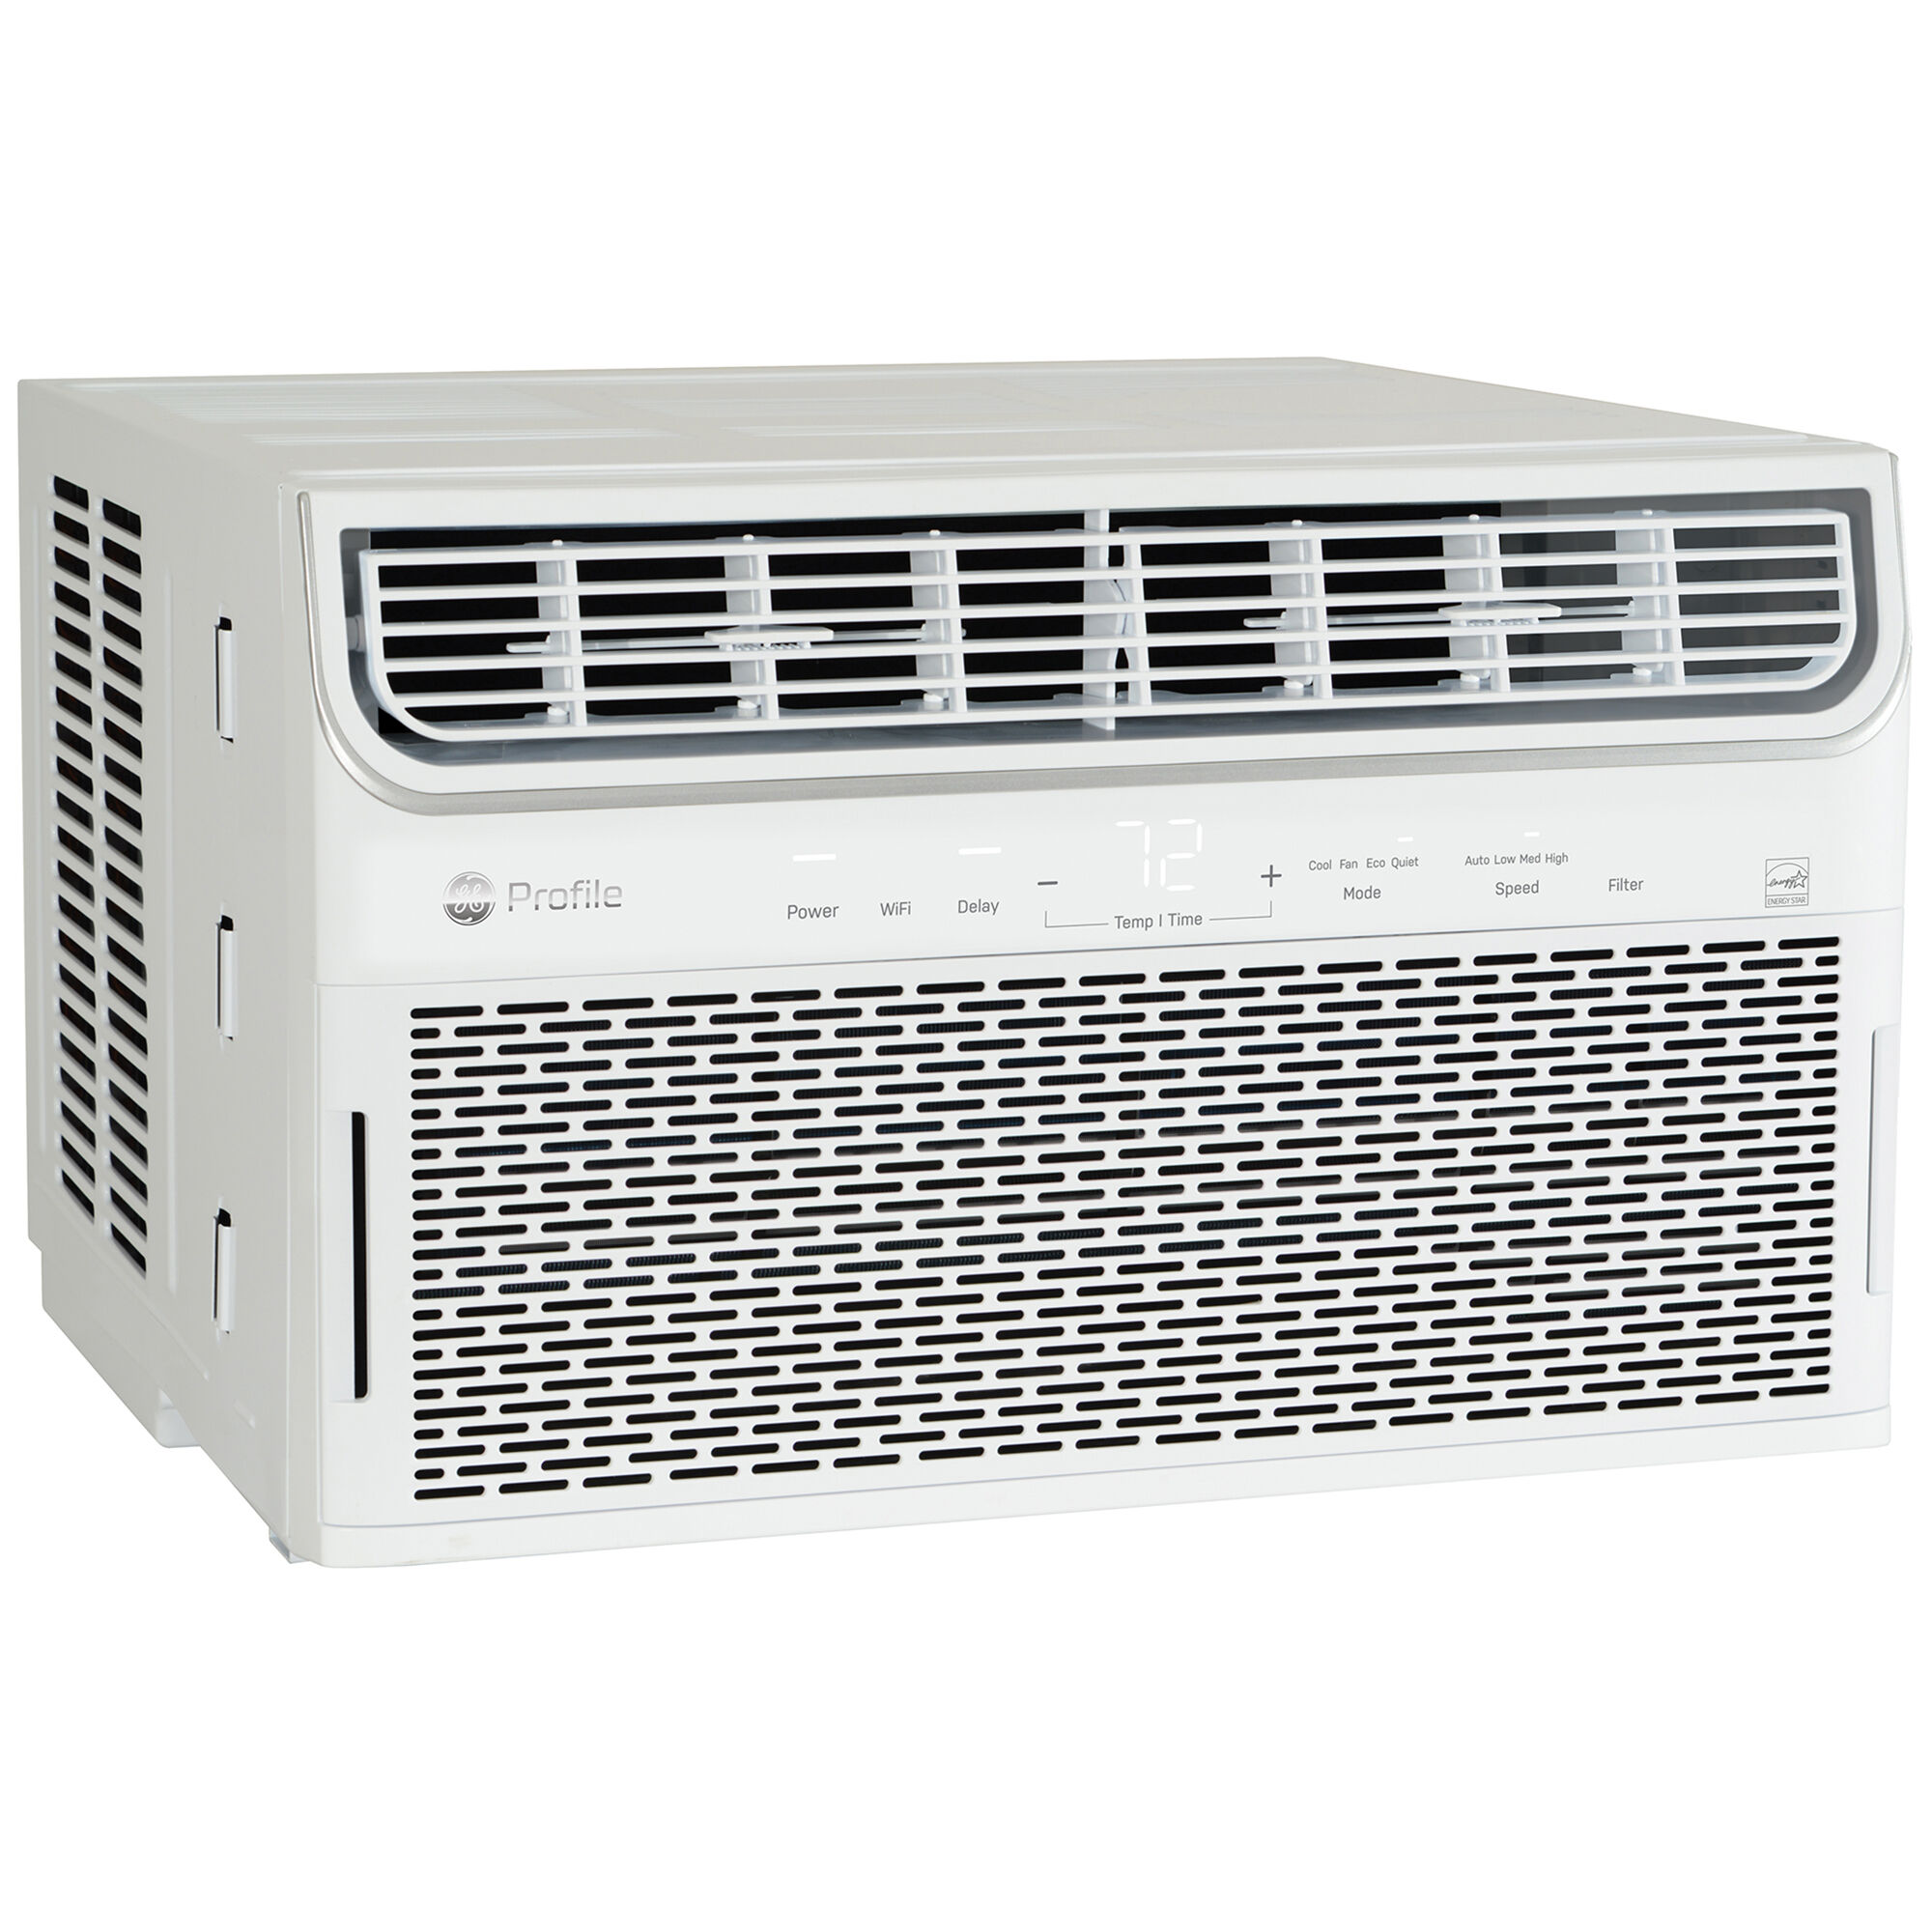 GE Profile 10,100 BTU Smart Energy Star Window Air Conditioner with  Inverter, 4 Fan Speeds & Remote Control - White